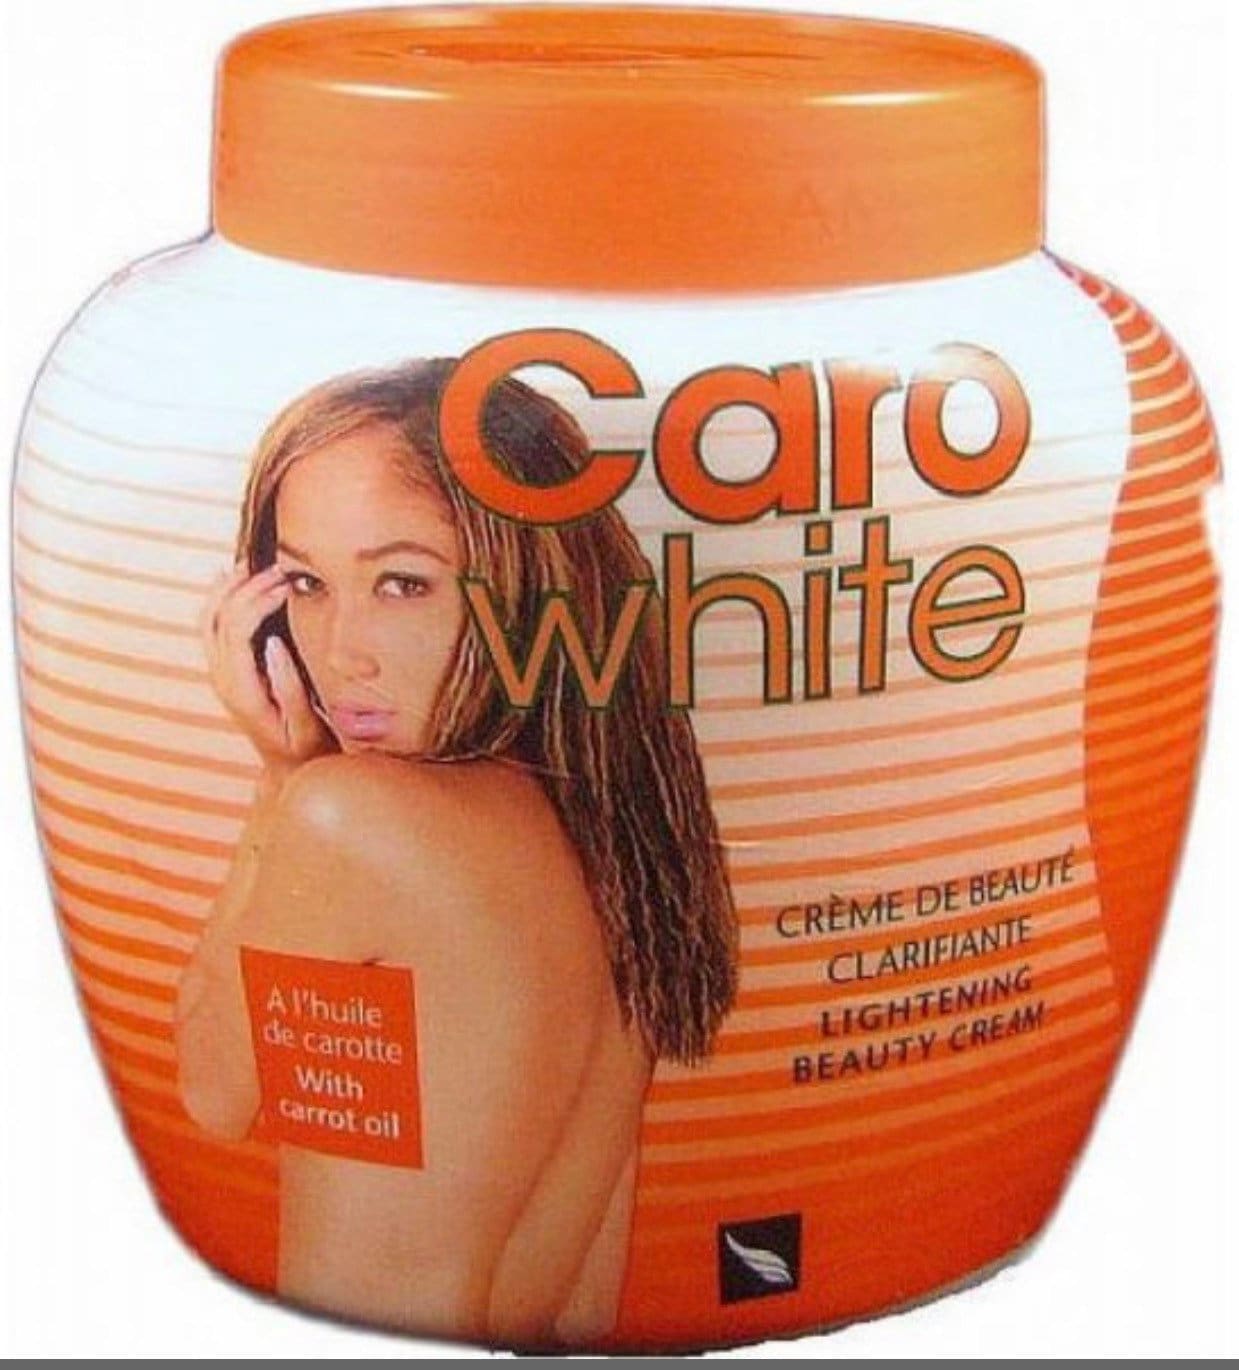 Authentic Caro White Lightening Beauty Cream with Carrot Oil 500 ML